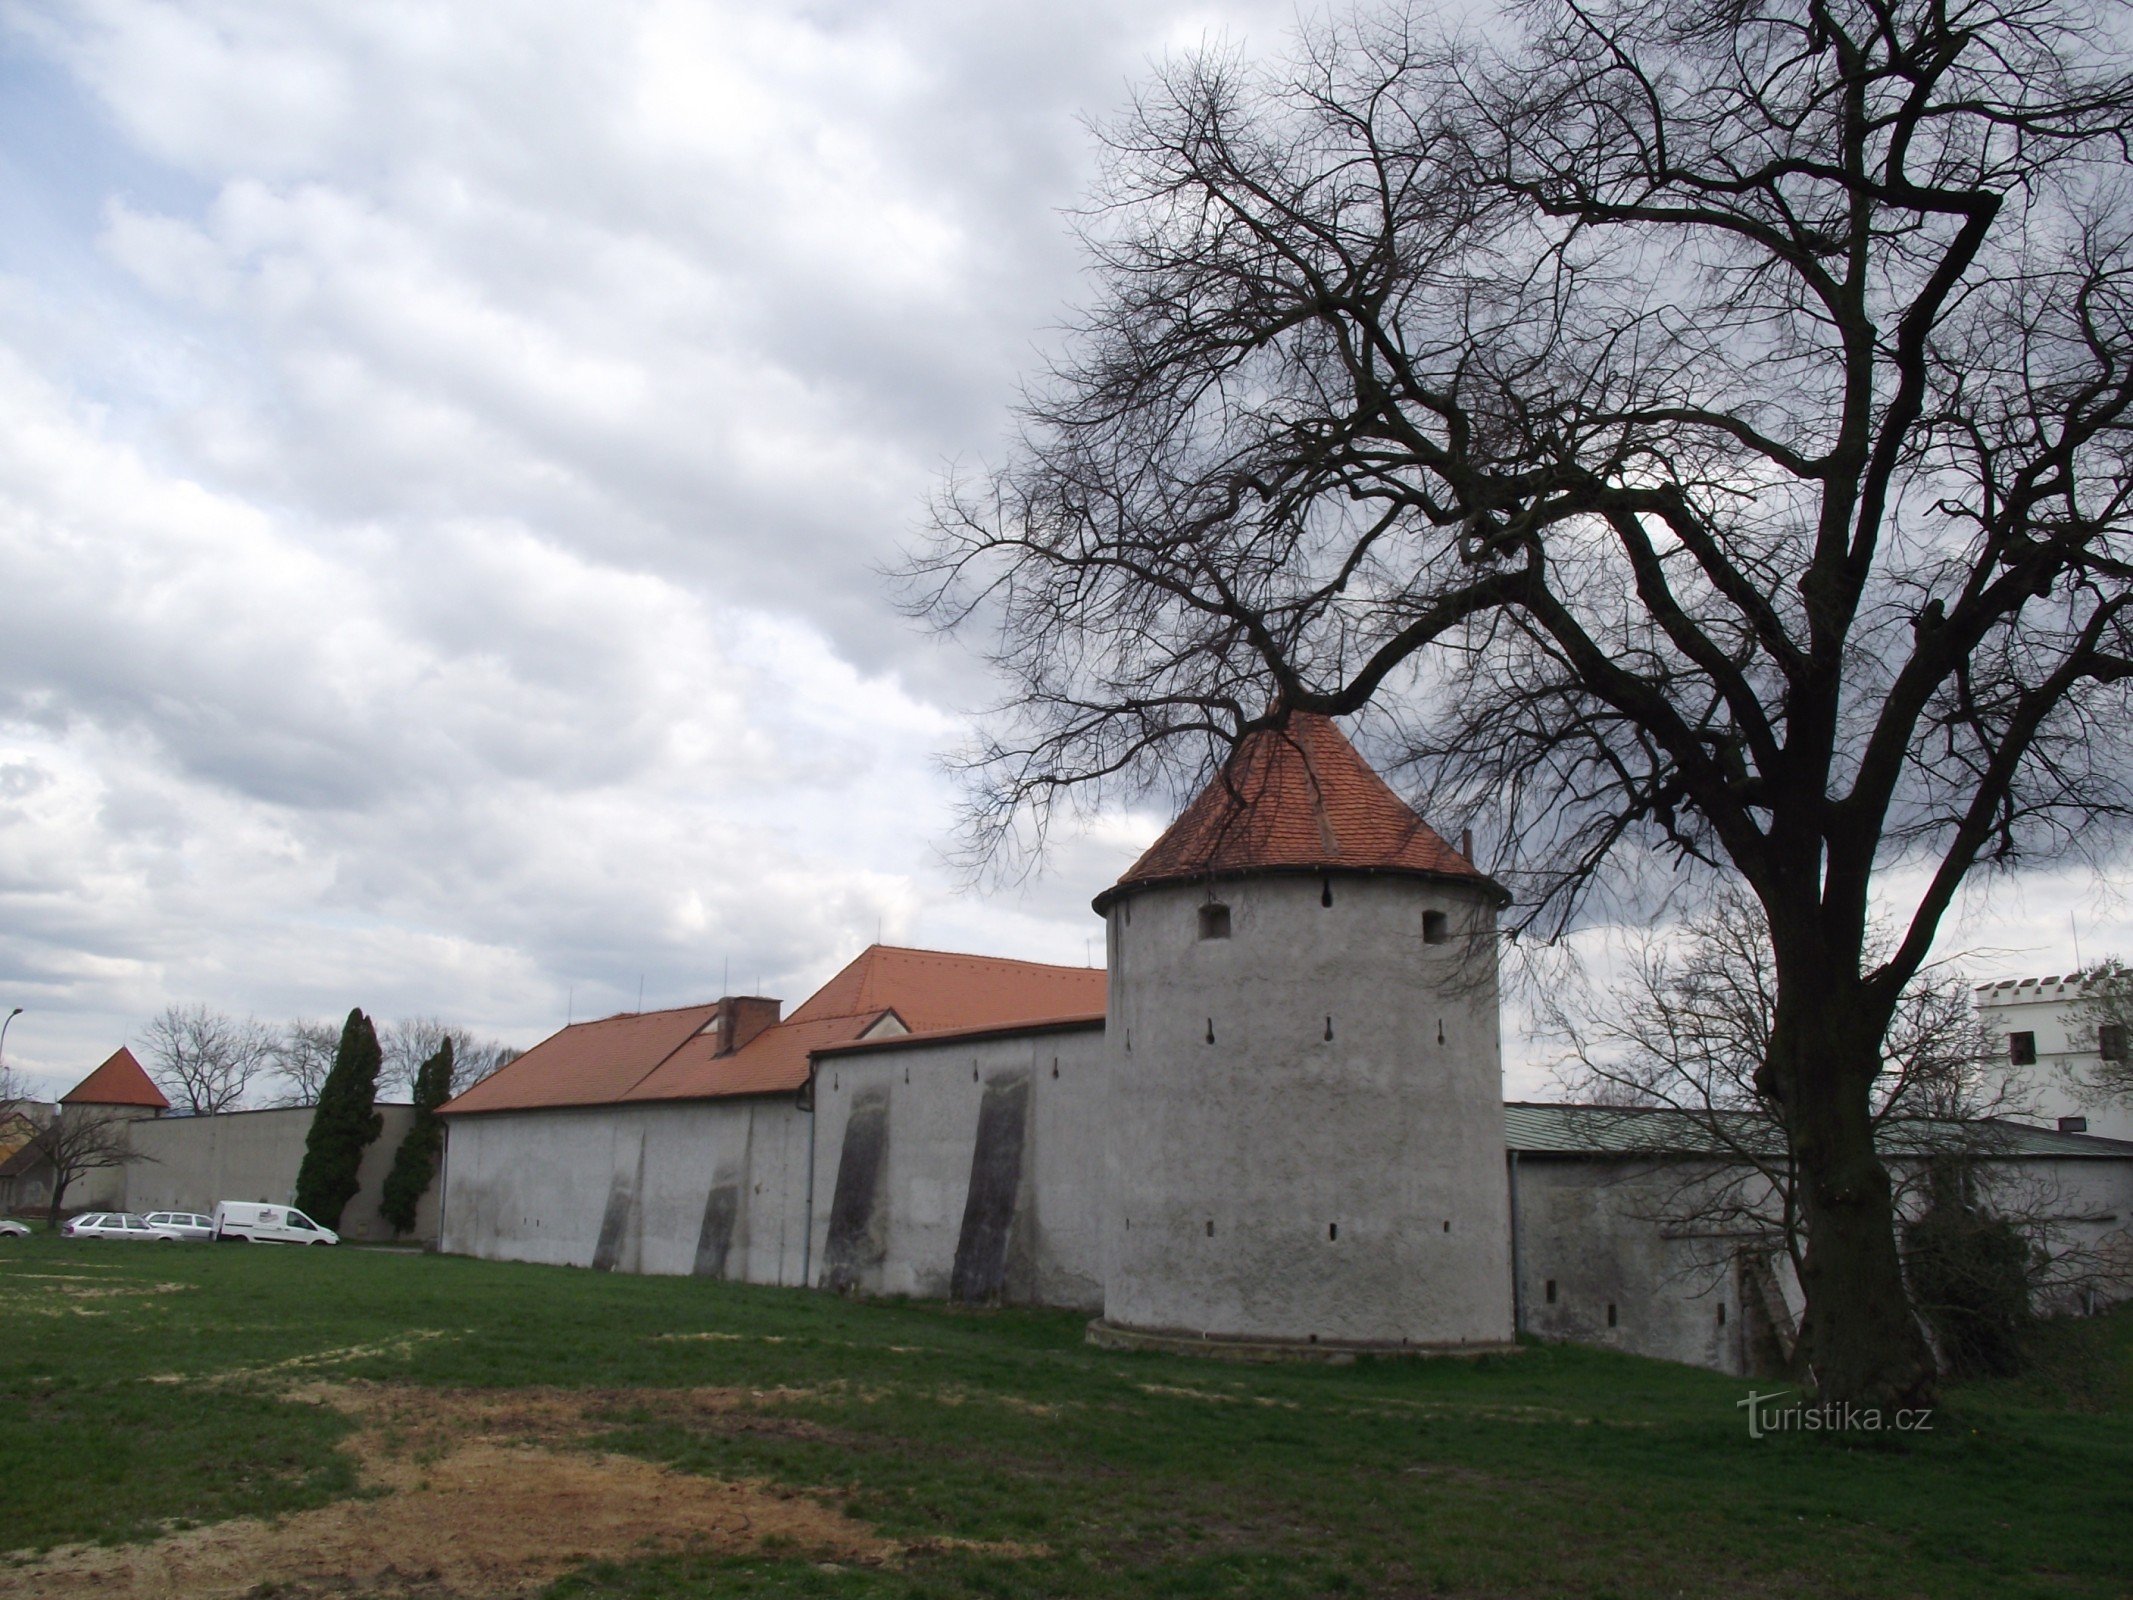 Uherský Brod - fortificazioni della città